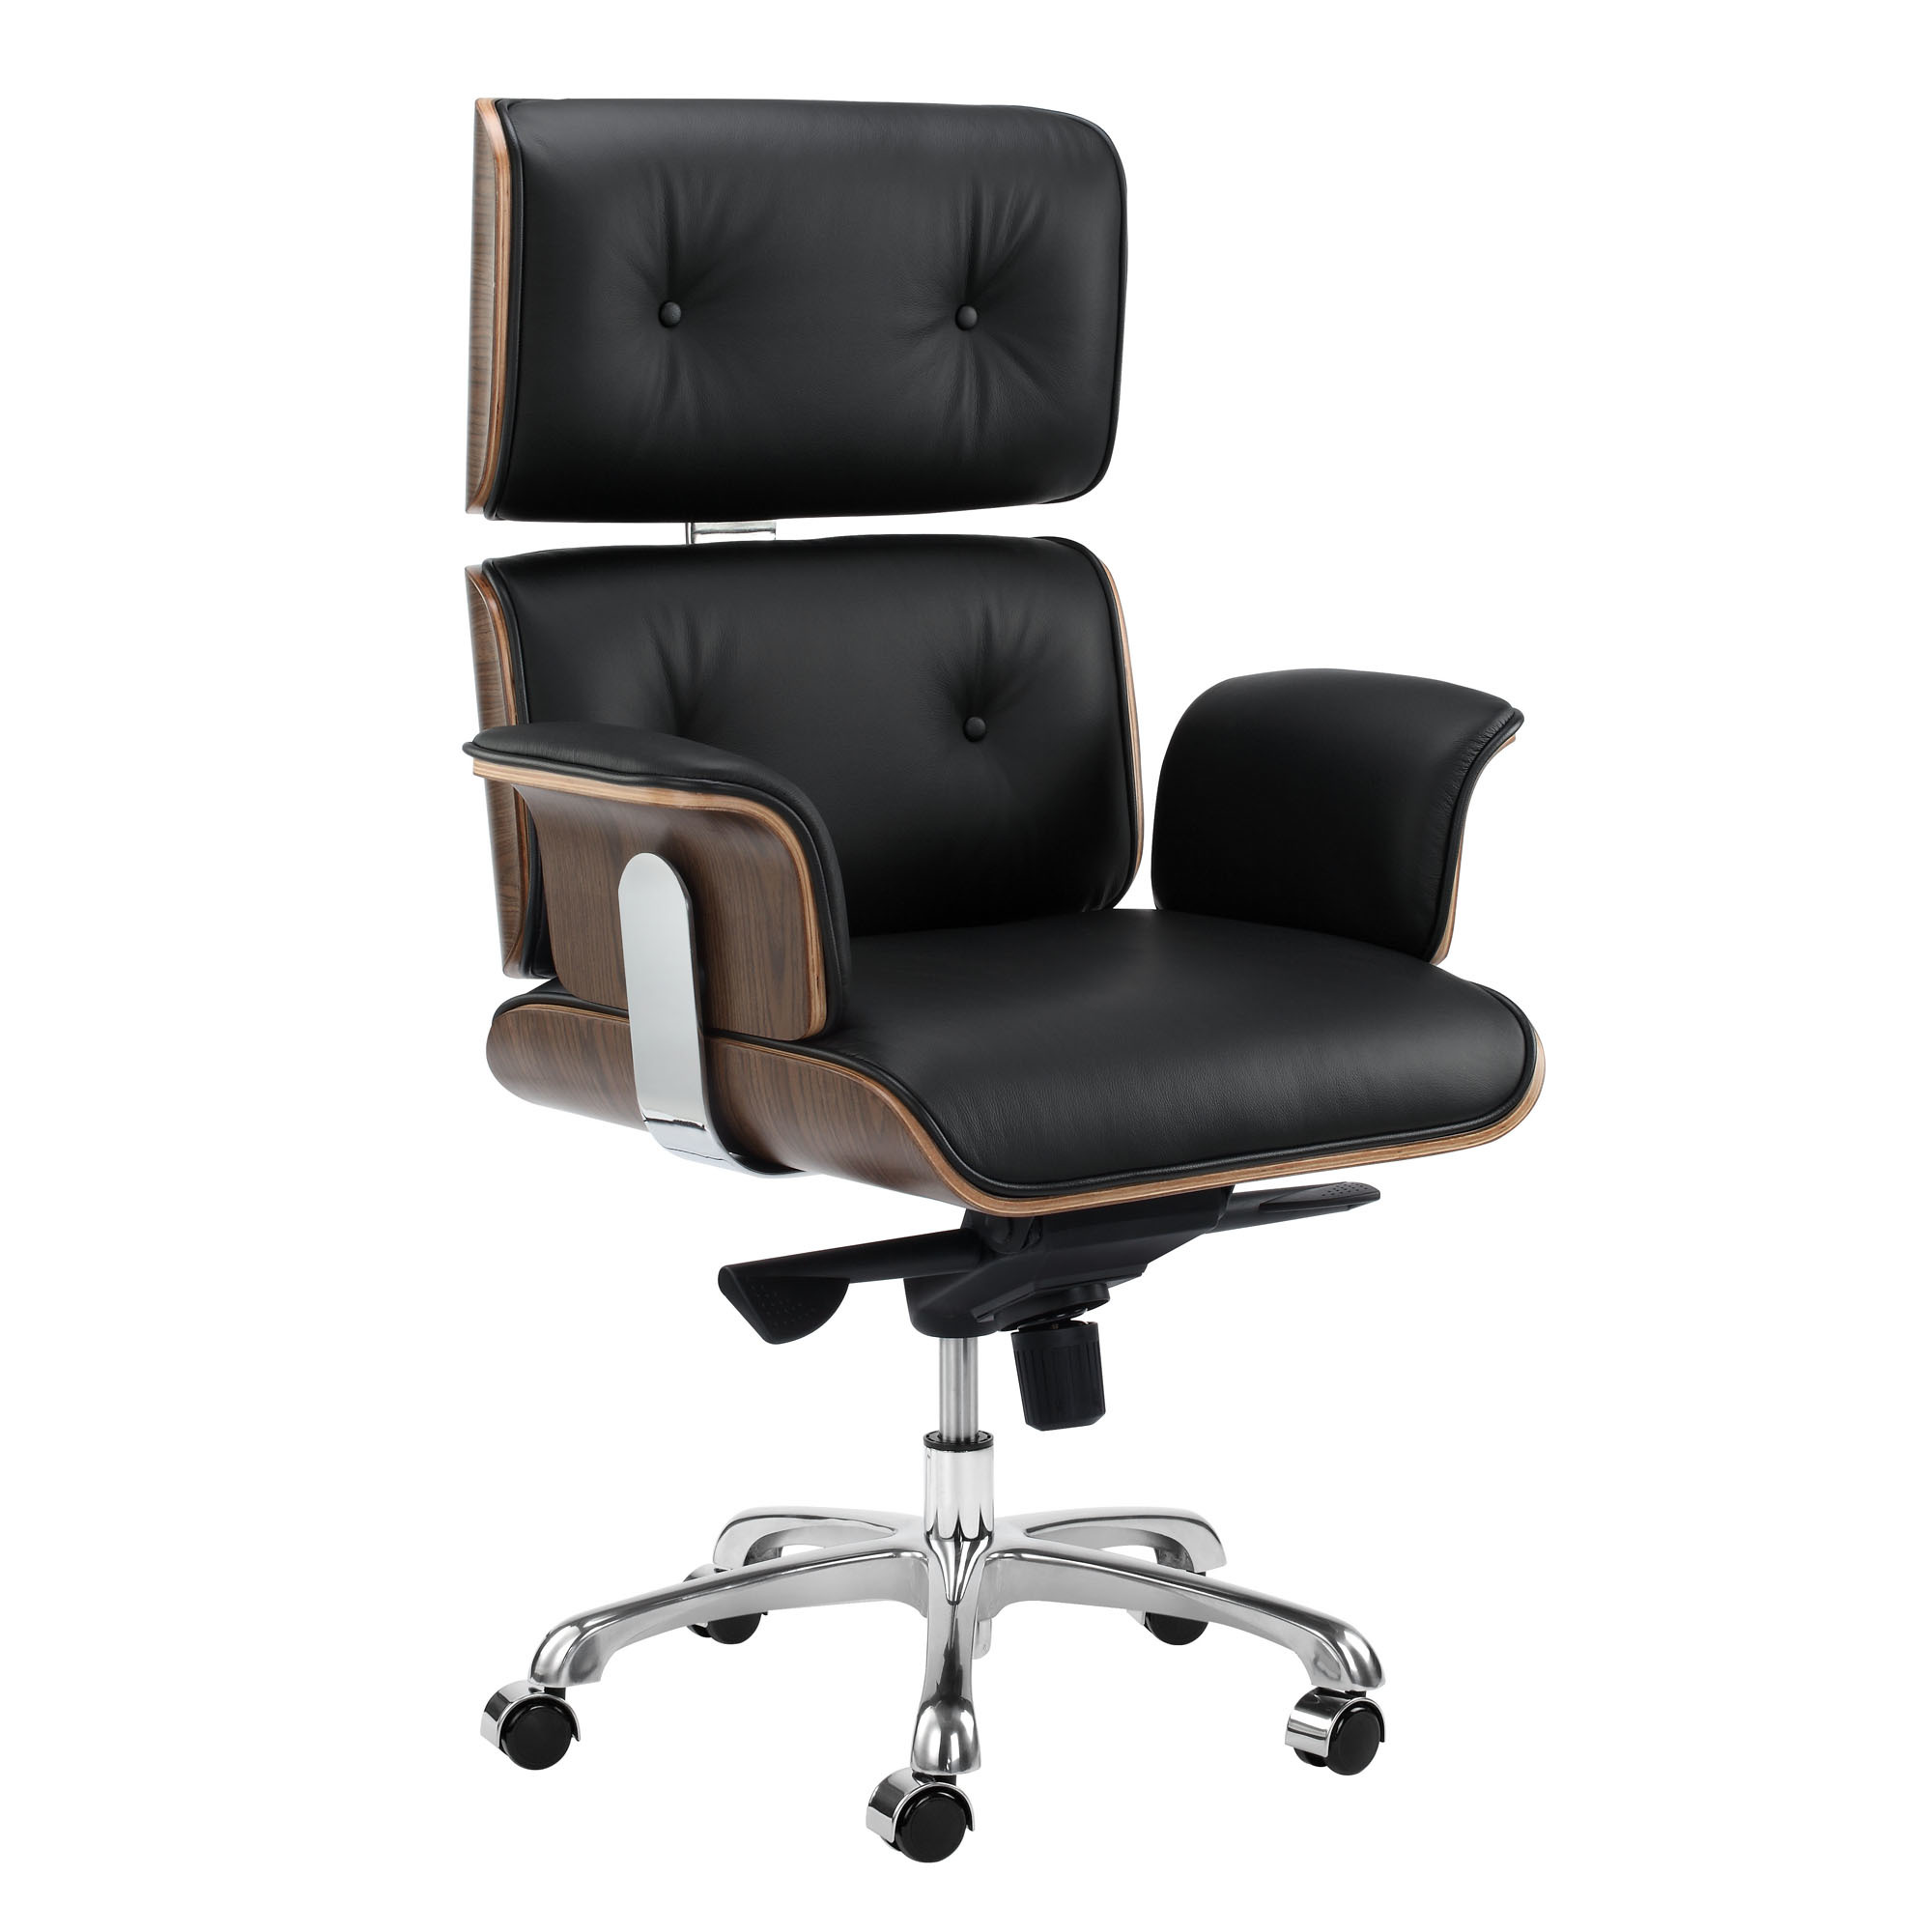 Milan Direct Eames Premium Replica, Black Leather Executive Desk Chair